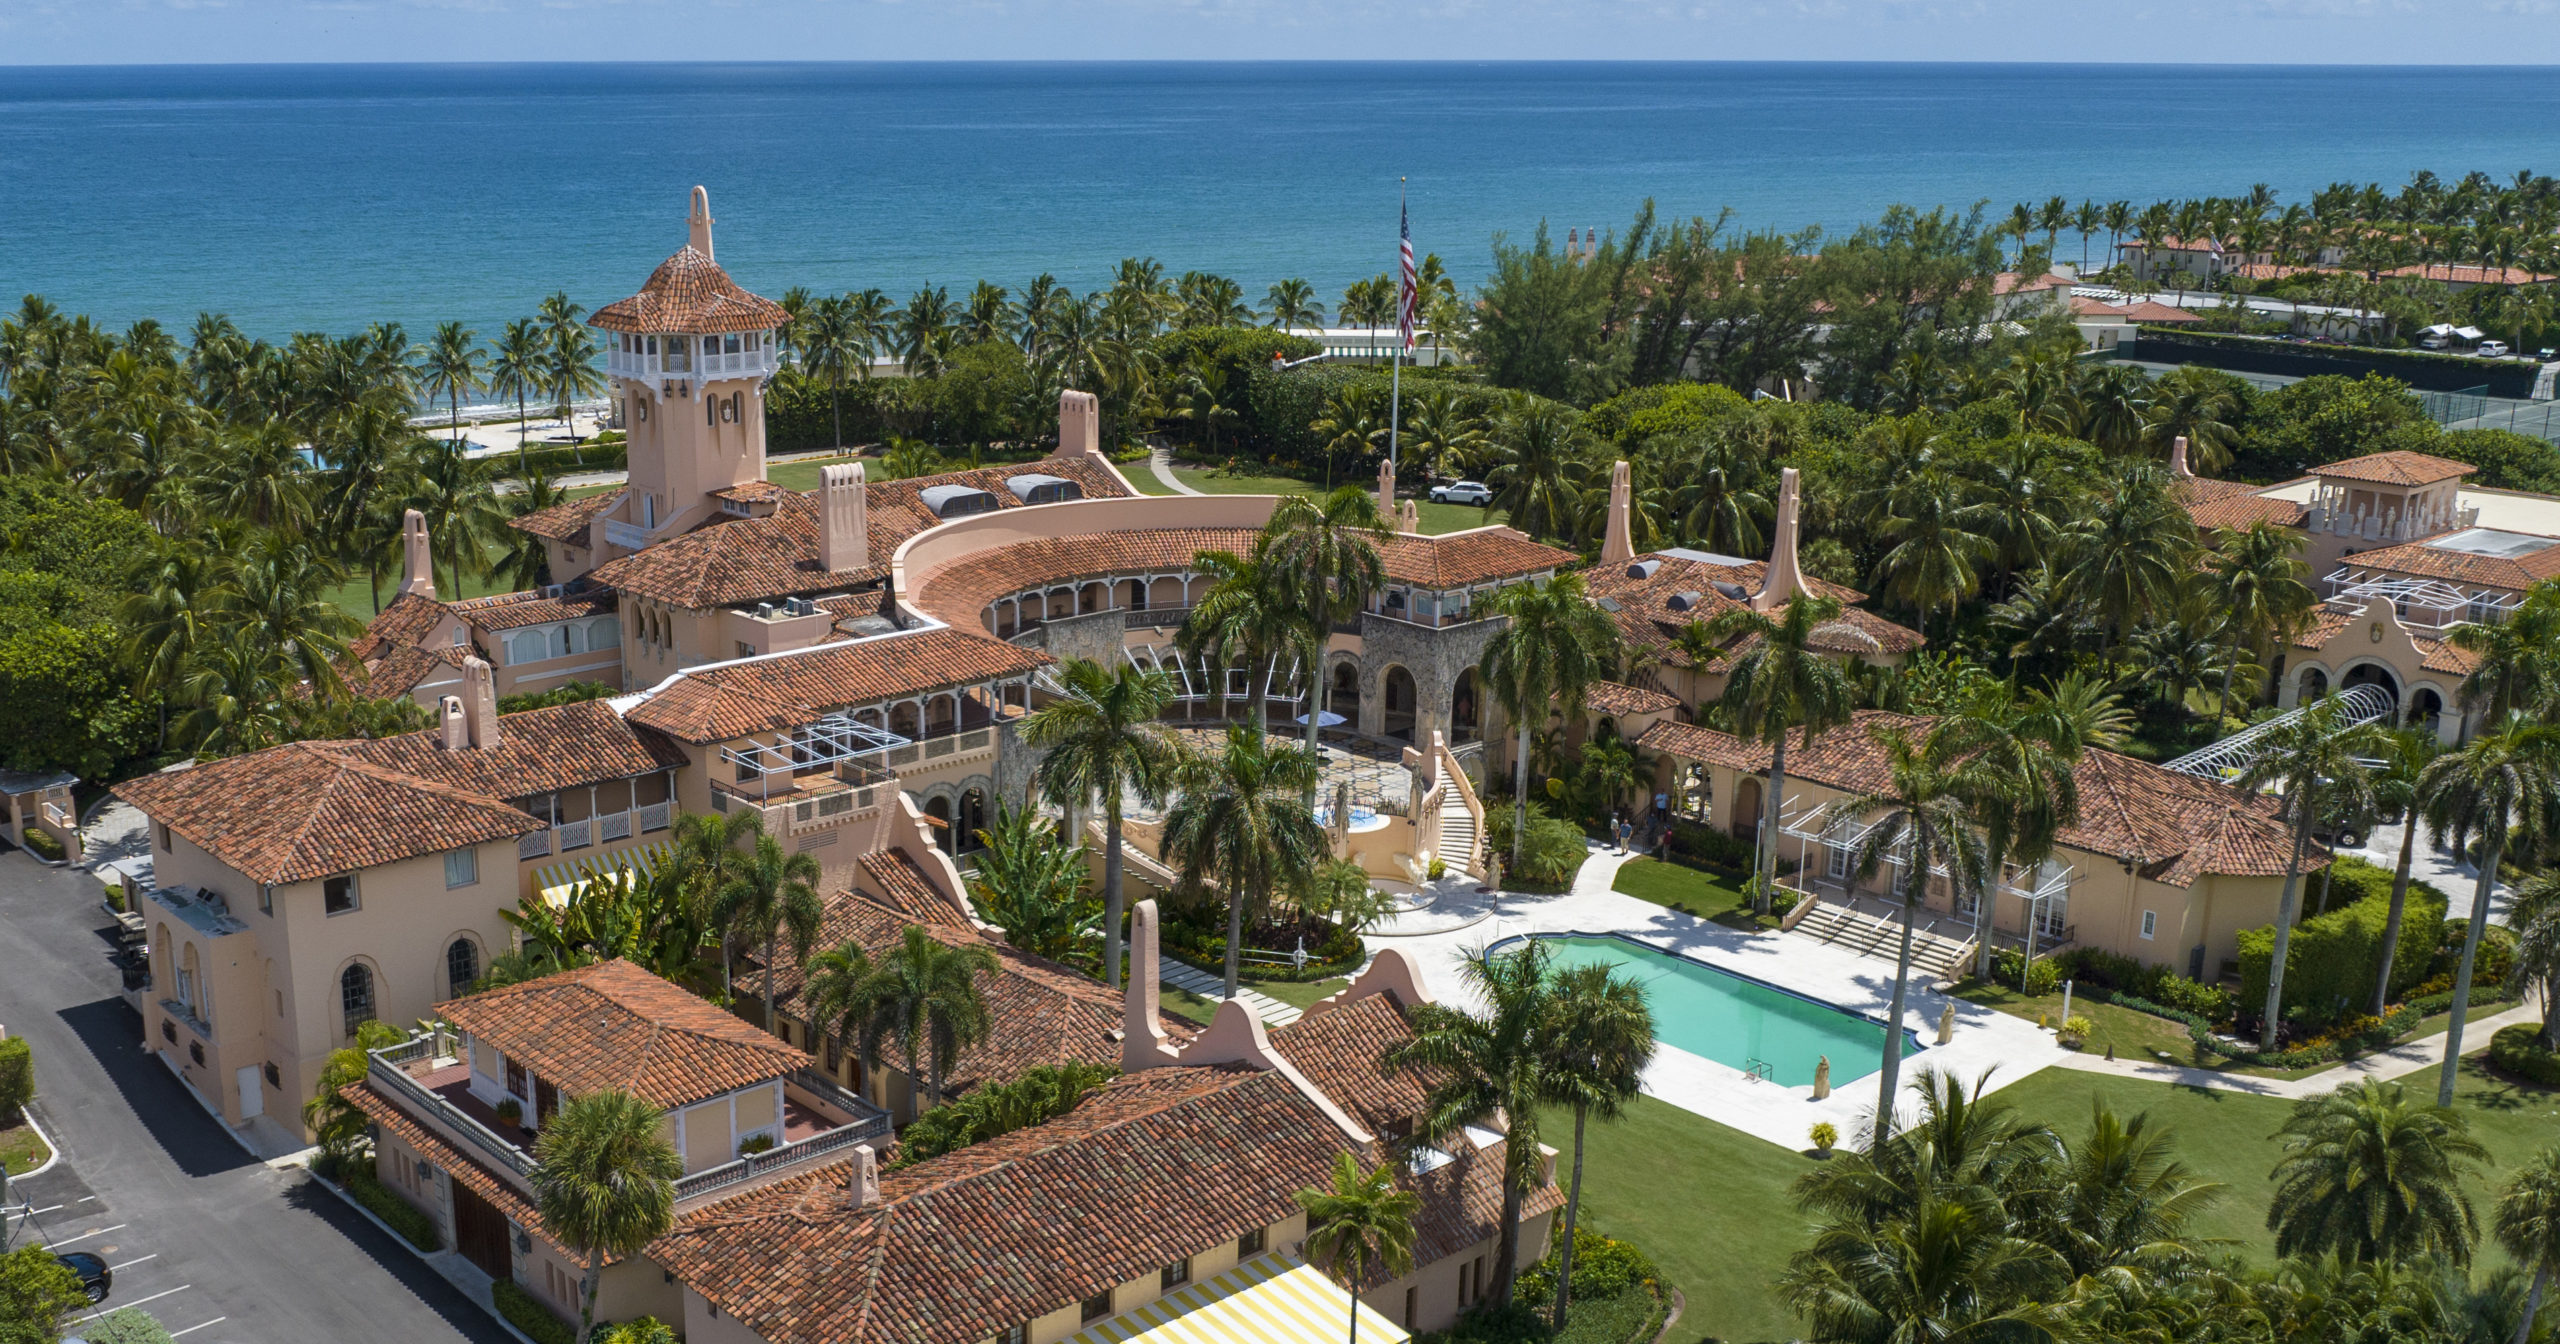 Former President Donald Trump's Mar-a-Lago estate in Palm Beach, Florida, was raided in August.